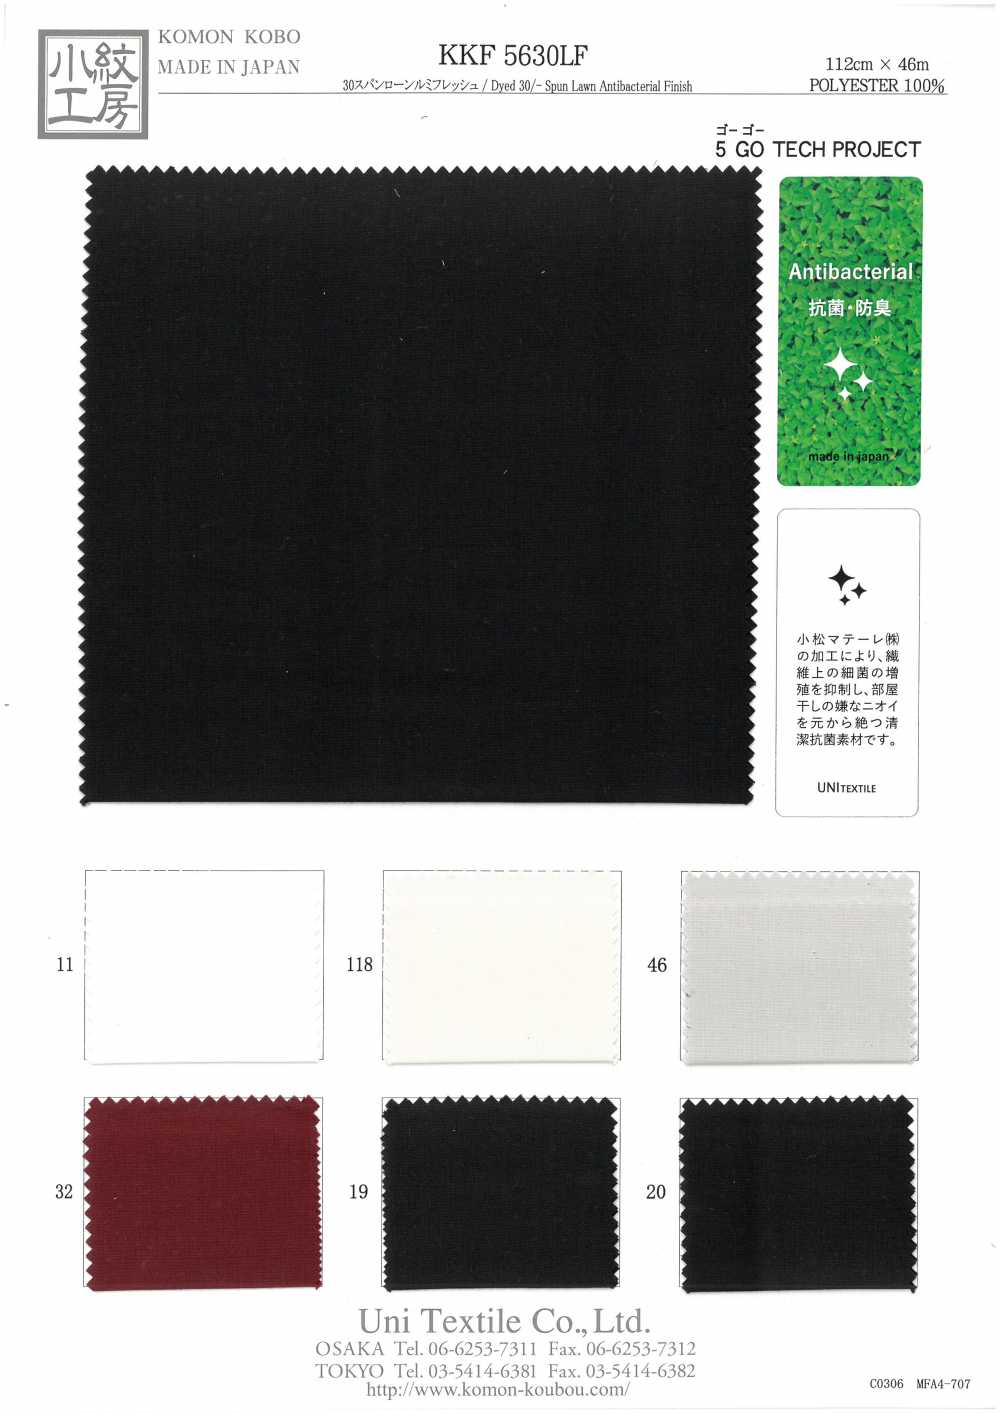 KKF5630LF 30 Gesponnener Rasen Lumi Fresh[Textilgewebe] Uni Textile